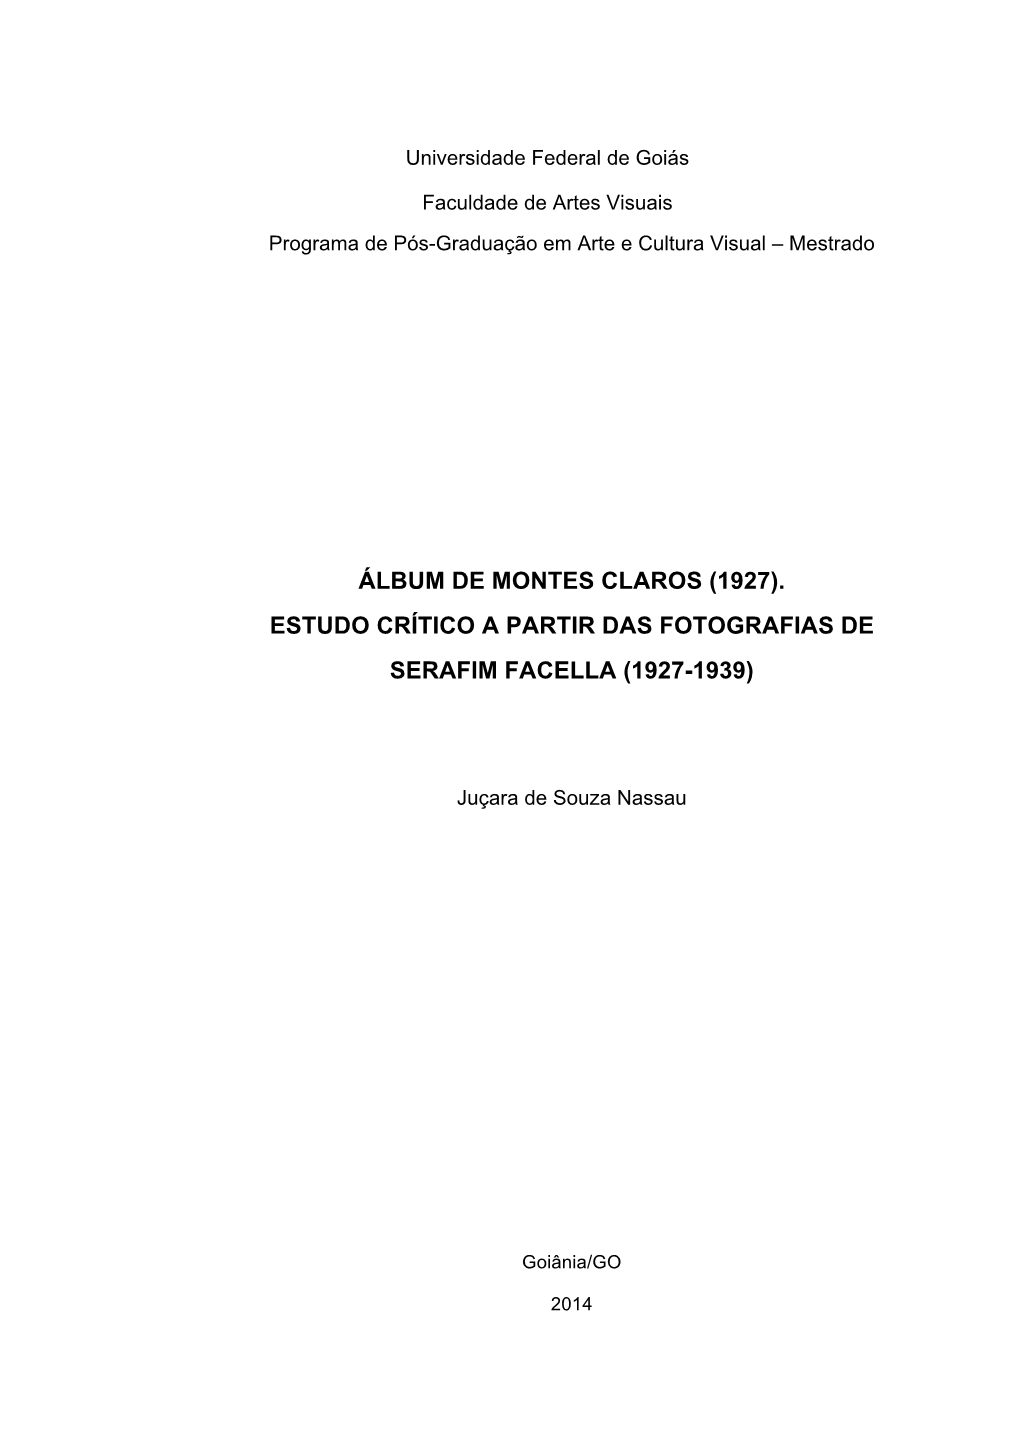 Álbum De Montes Claros (1927)